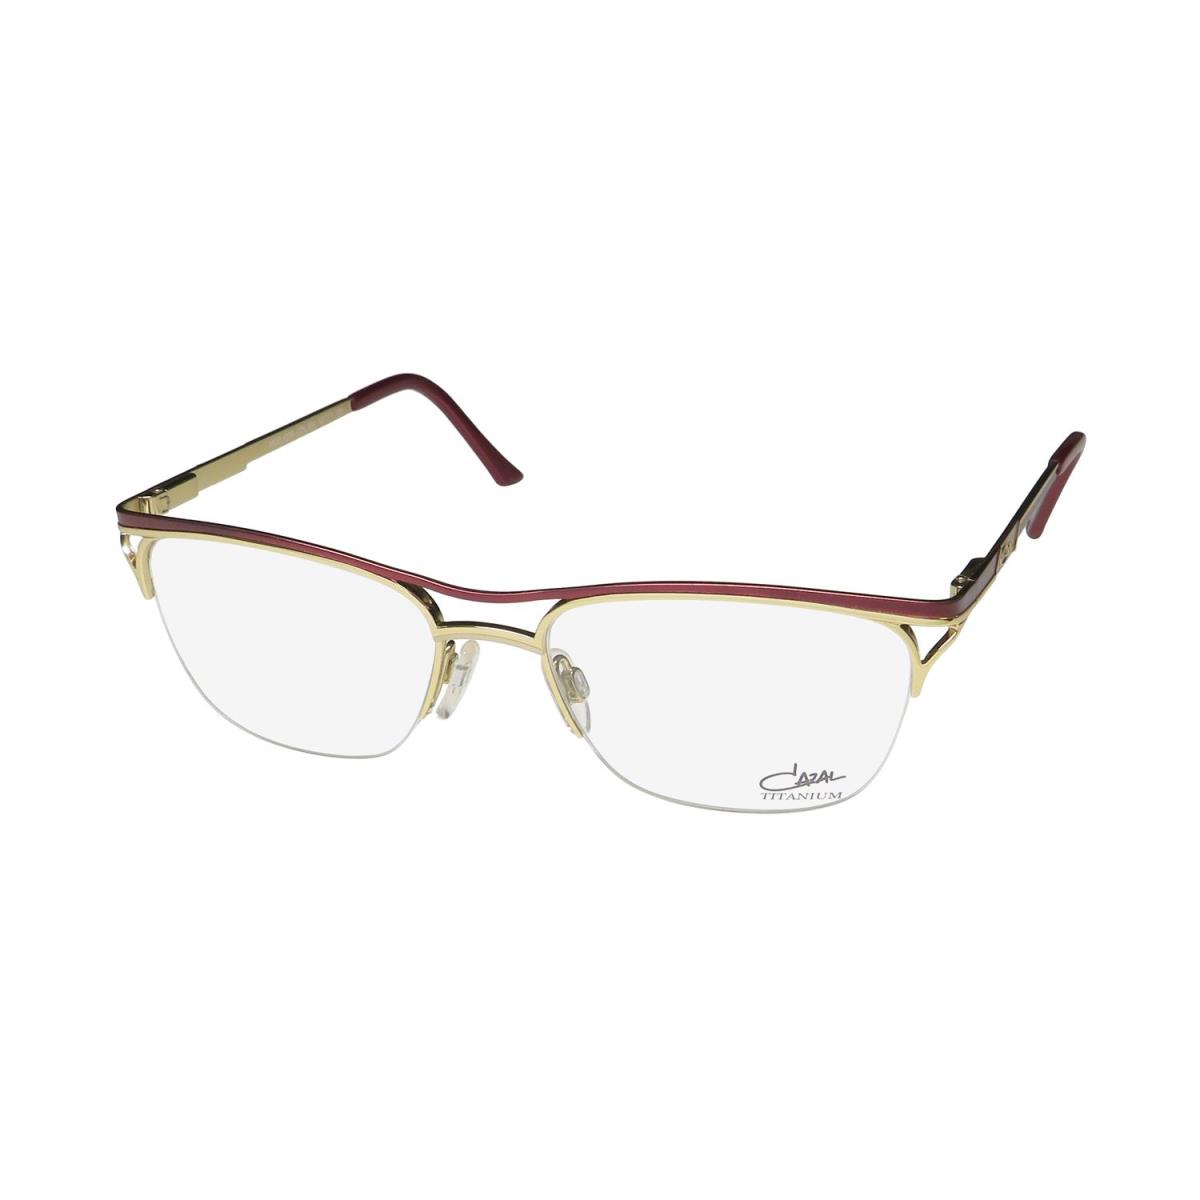 Cazal 4278 Titanium Half-rim Imported From Germany Rare Eyeglass Frame/glasses Burgundy / Gold